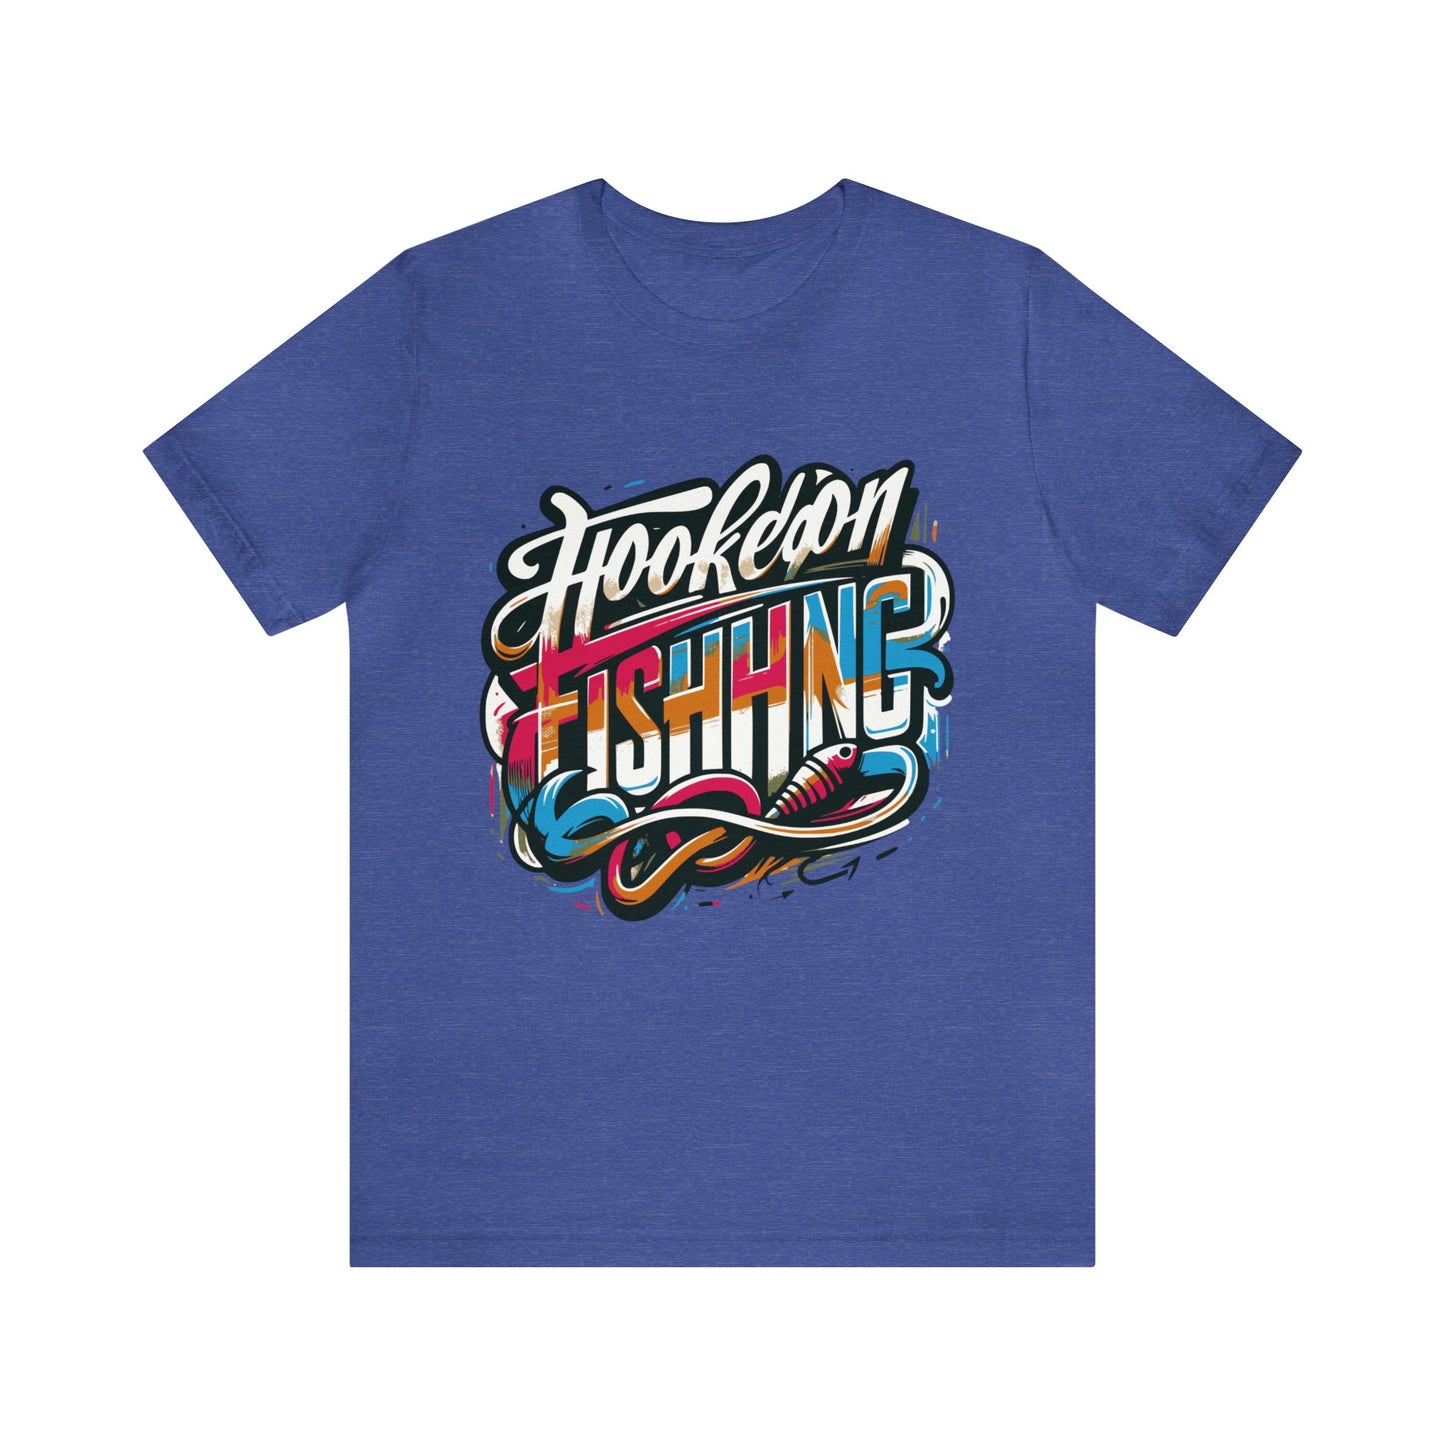 Ultimate Angler's Choice: 'Hooked on Fishing' Graffiti Graphic T-Shirt